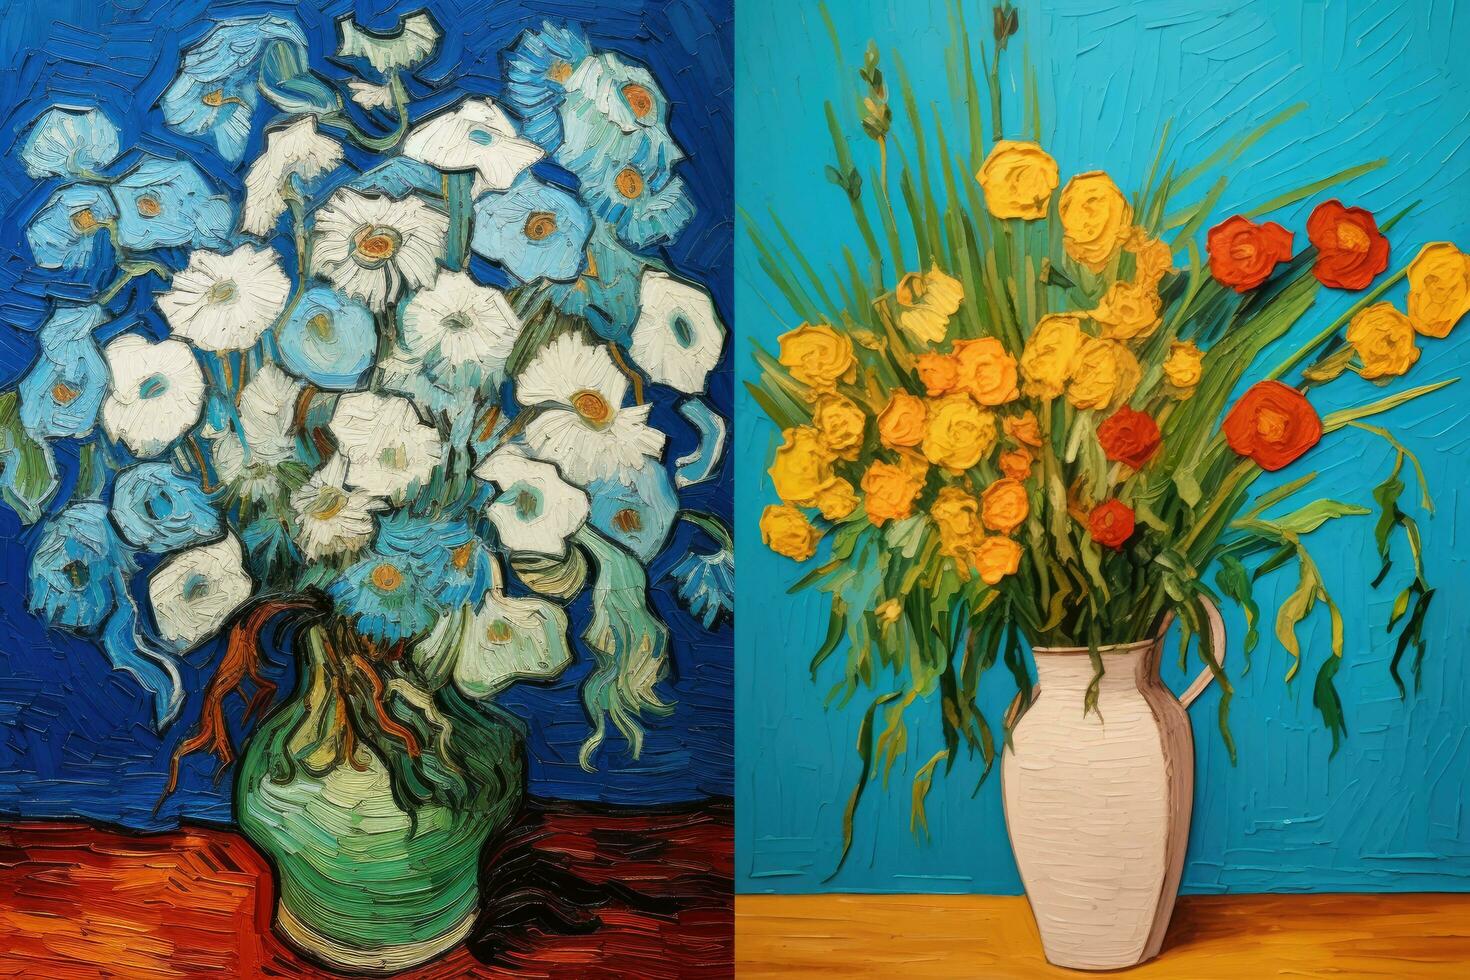 målning av en bukett av blommor i en vas, blomma konstverk i skåpbil goghs stil, ai genererad foto